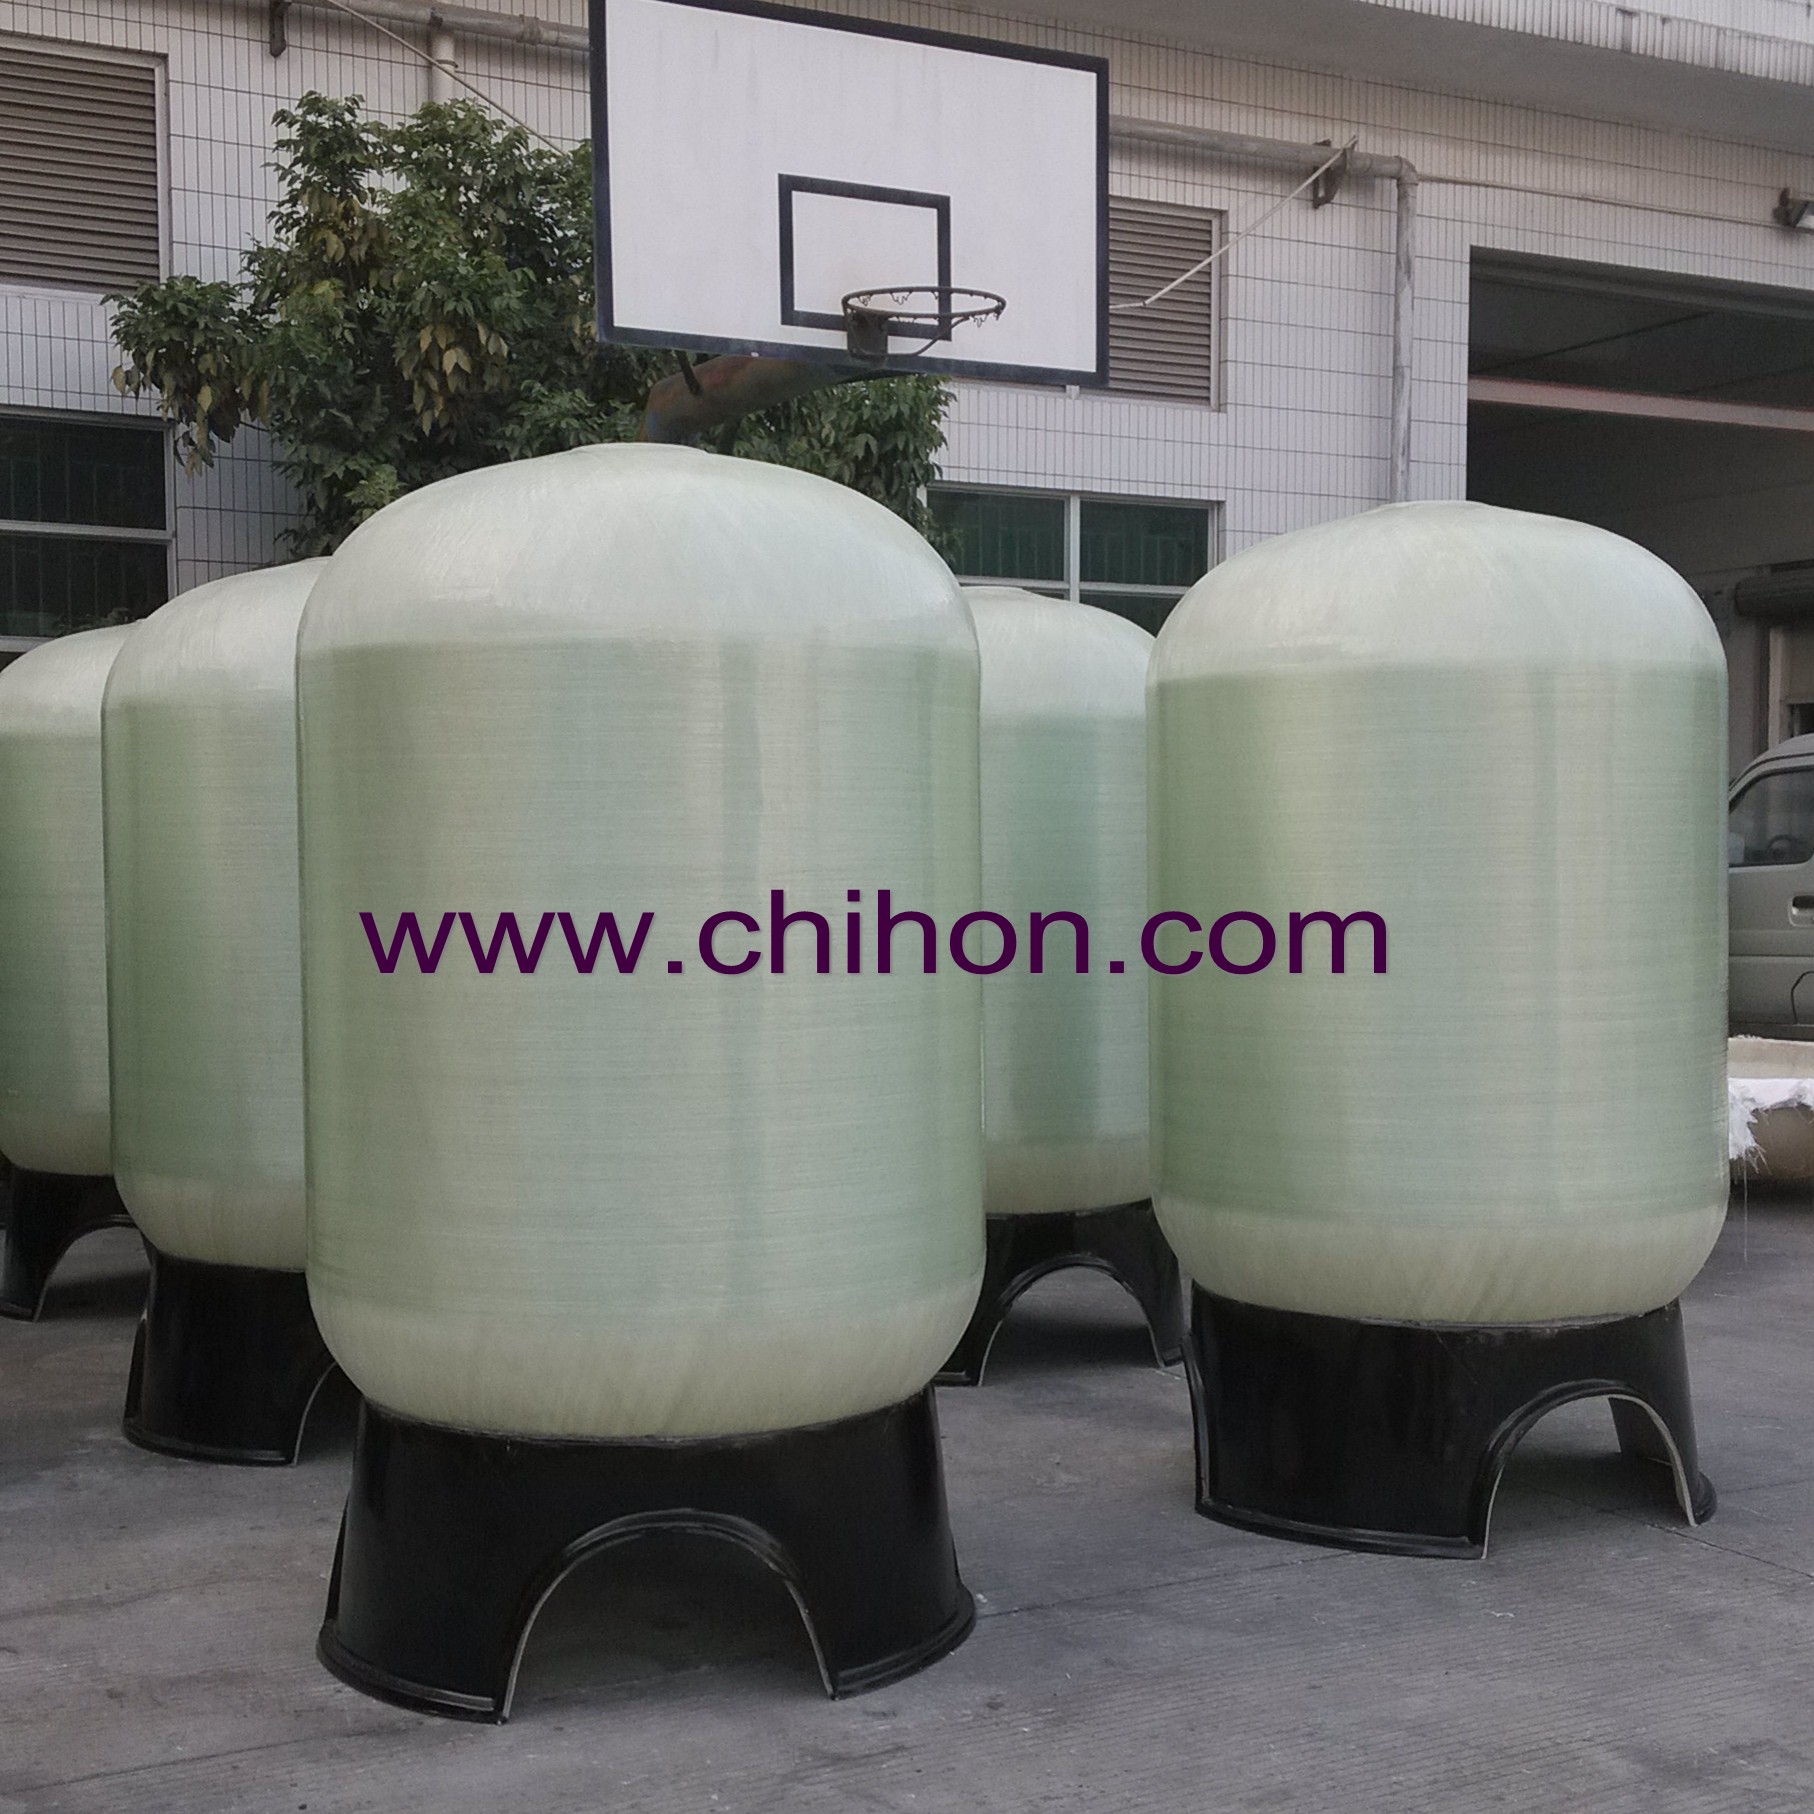 4896 Industrial Water Filter Tank PE Lined FRP Pressure Softener Tank